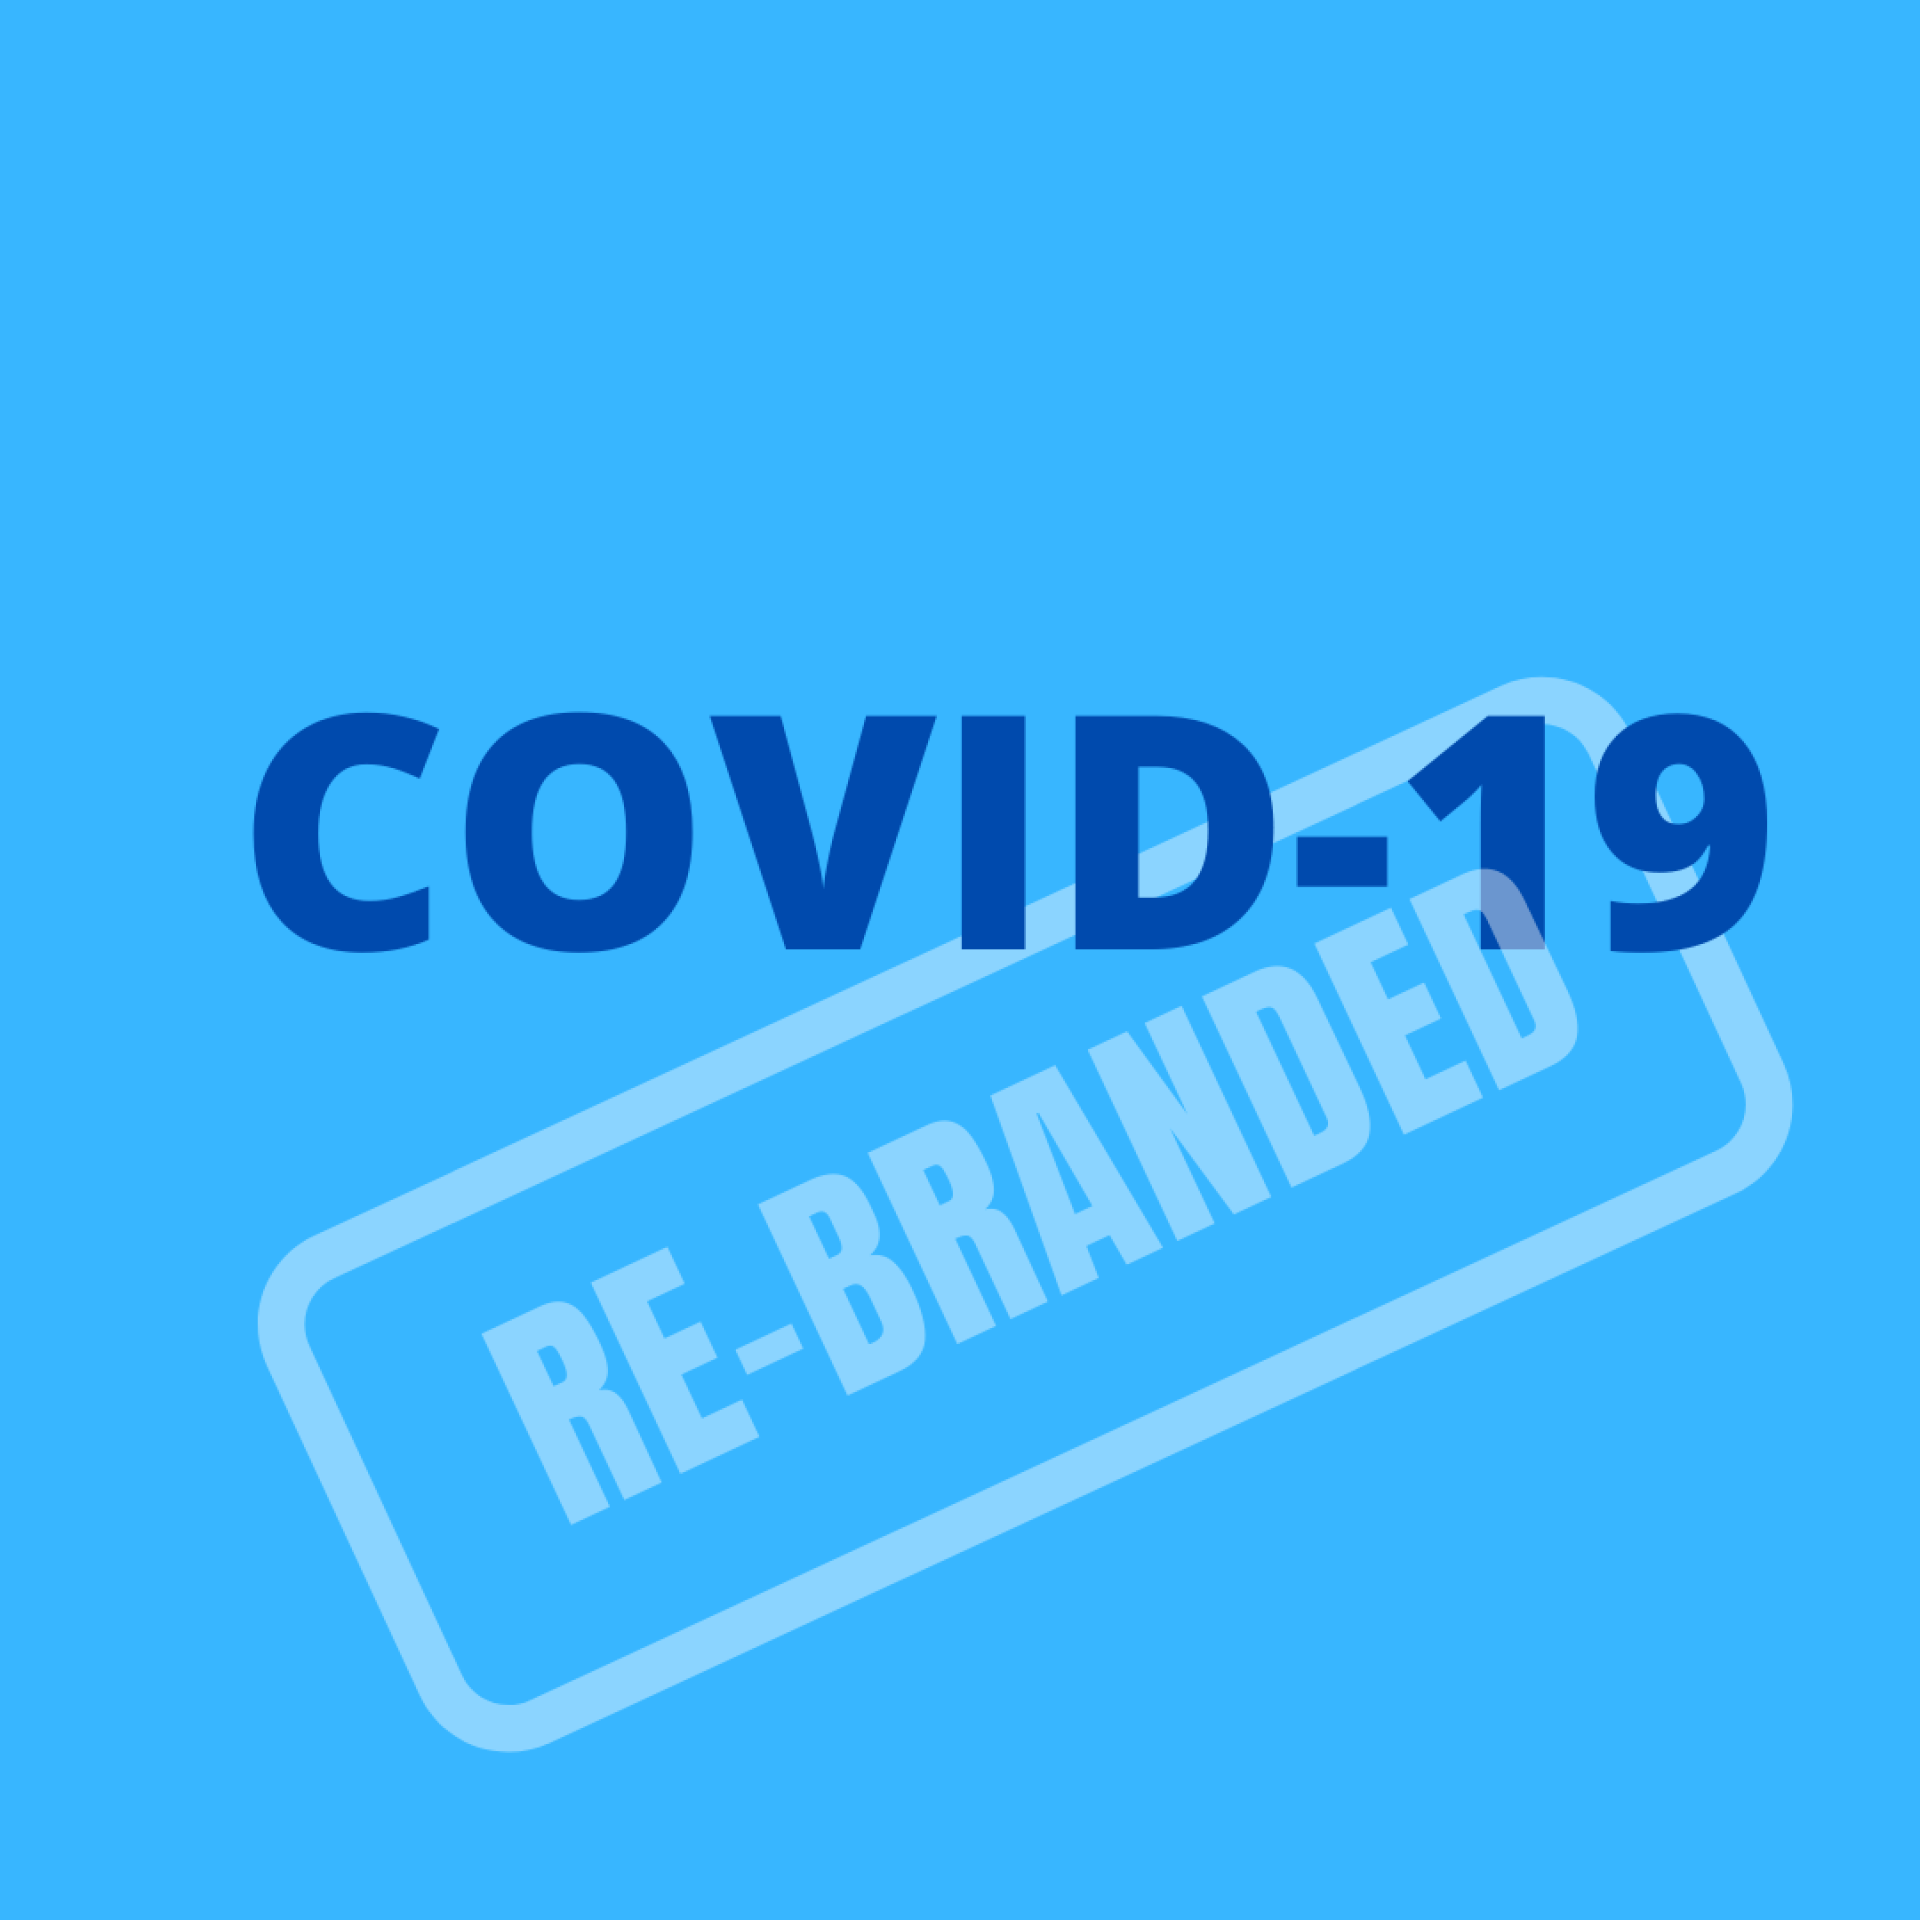 COVID-19 Re-Branded montrealmom